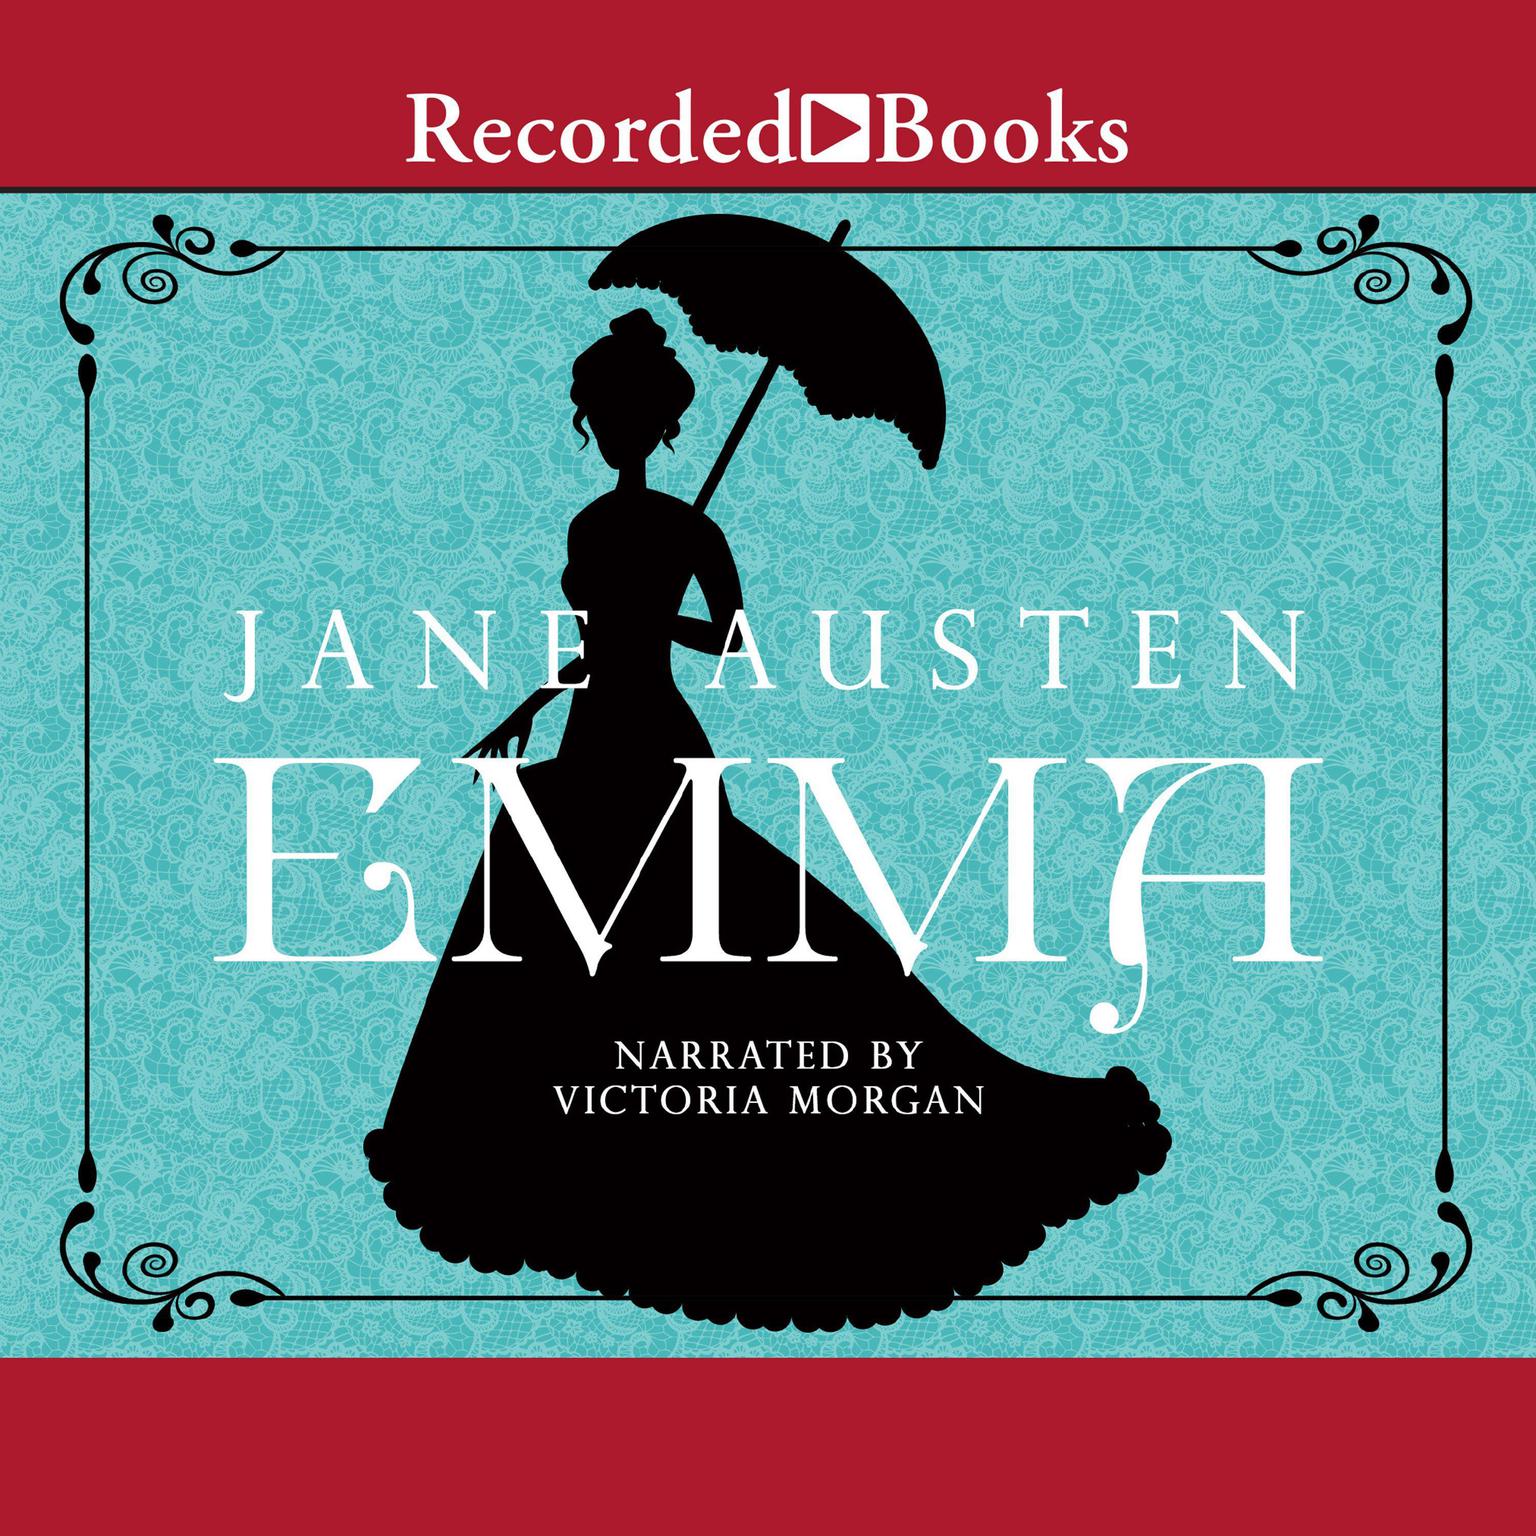 Emma Audiobook, by Jane Austen